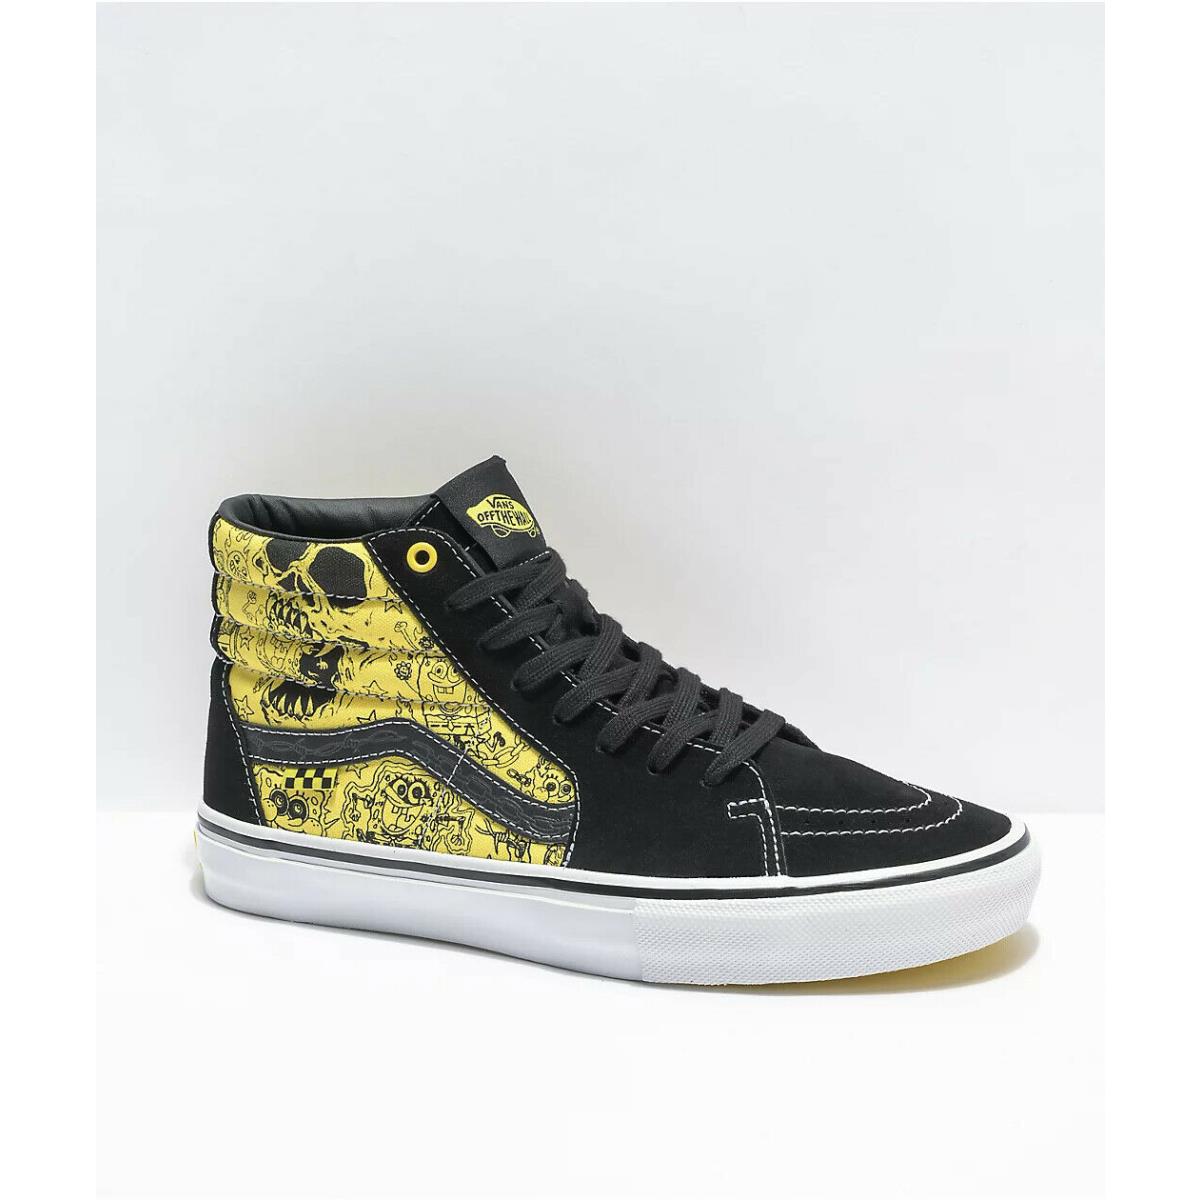 Vans Skate Sk8 Hi Spongebob Squarepants Shoes Black / Yellow Men`s Size 8